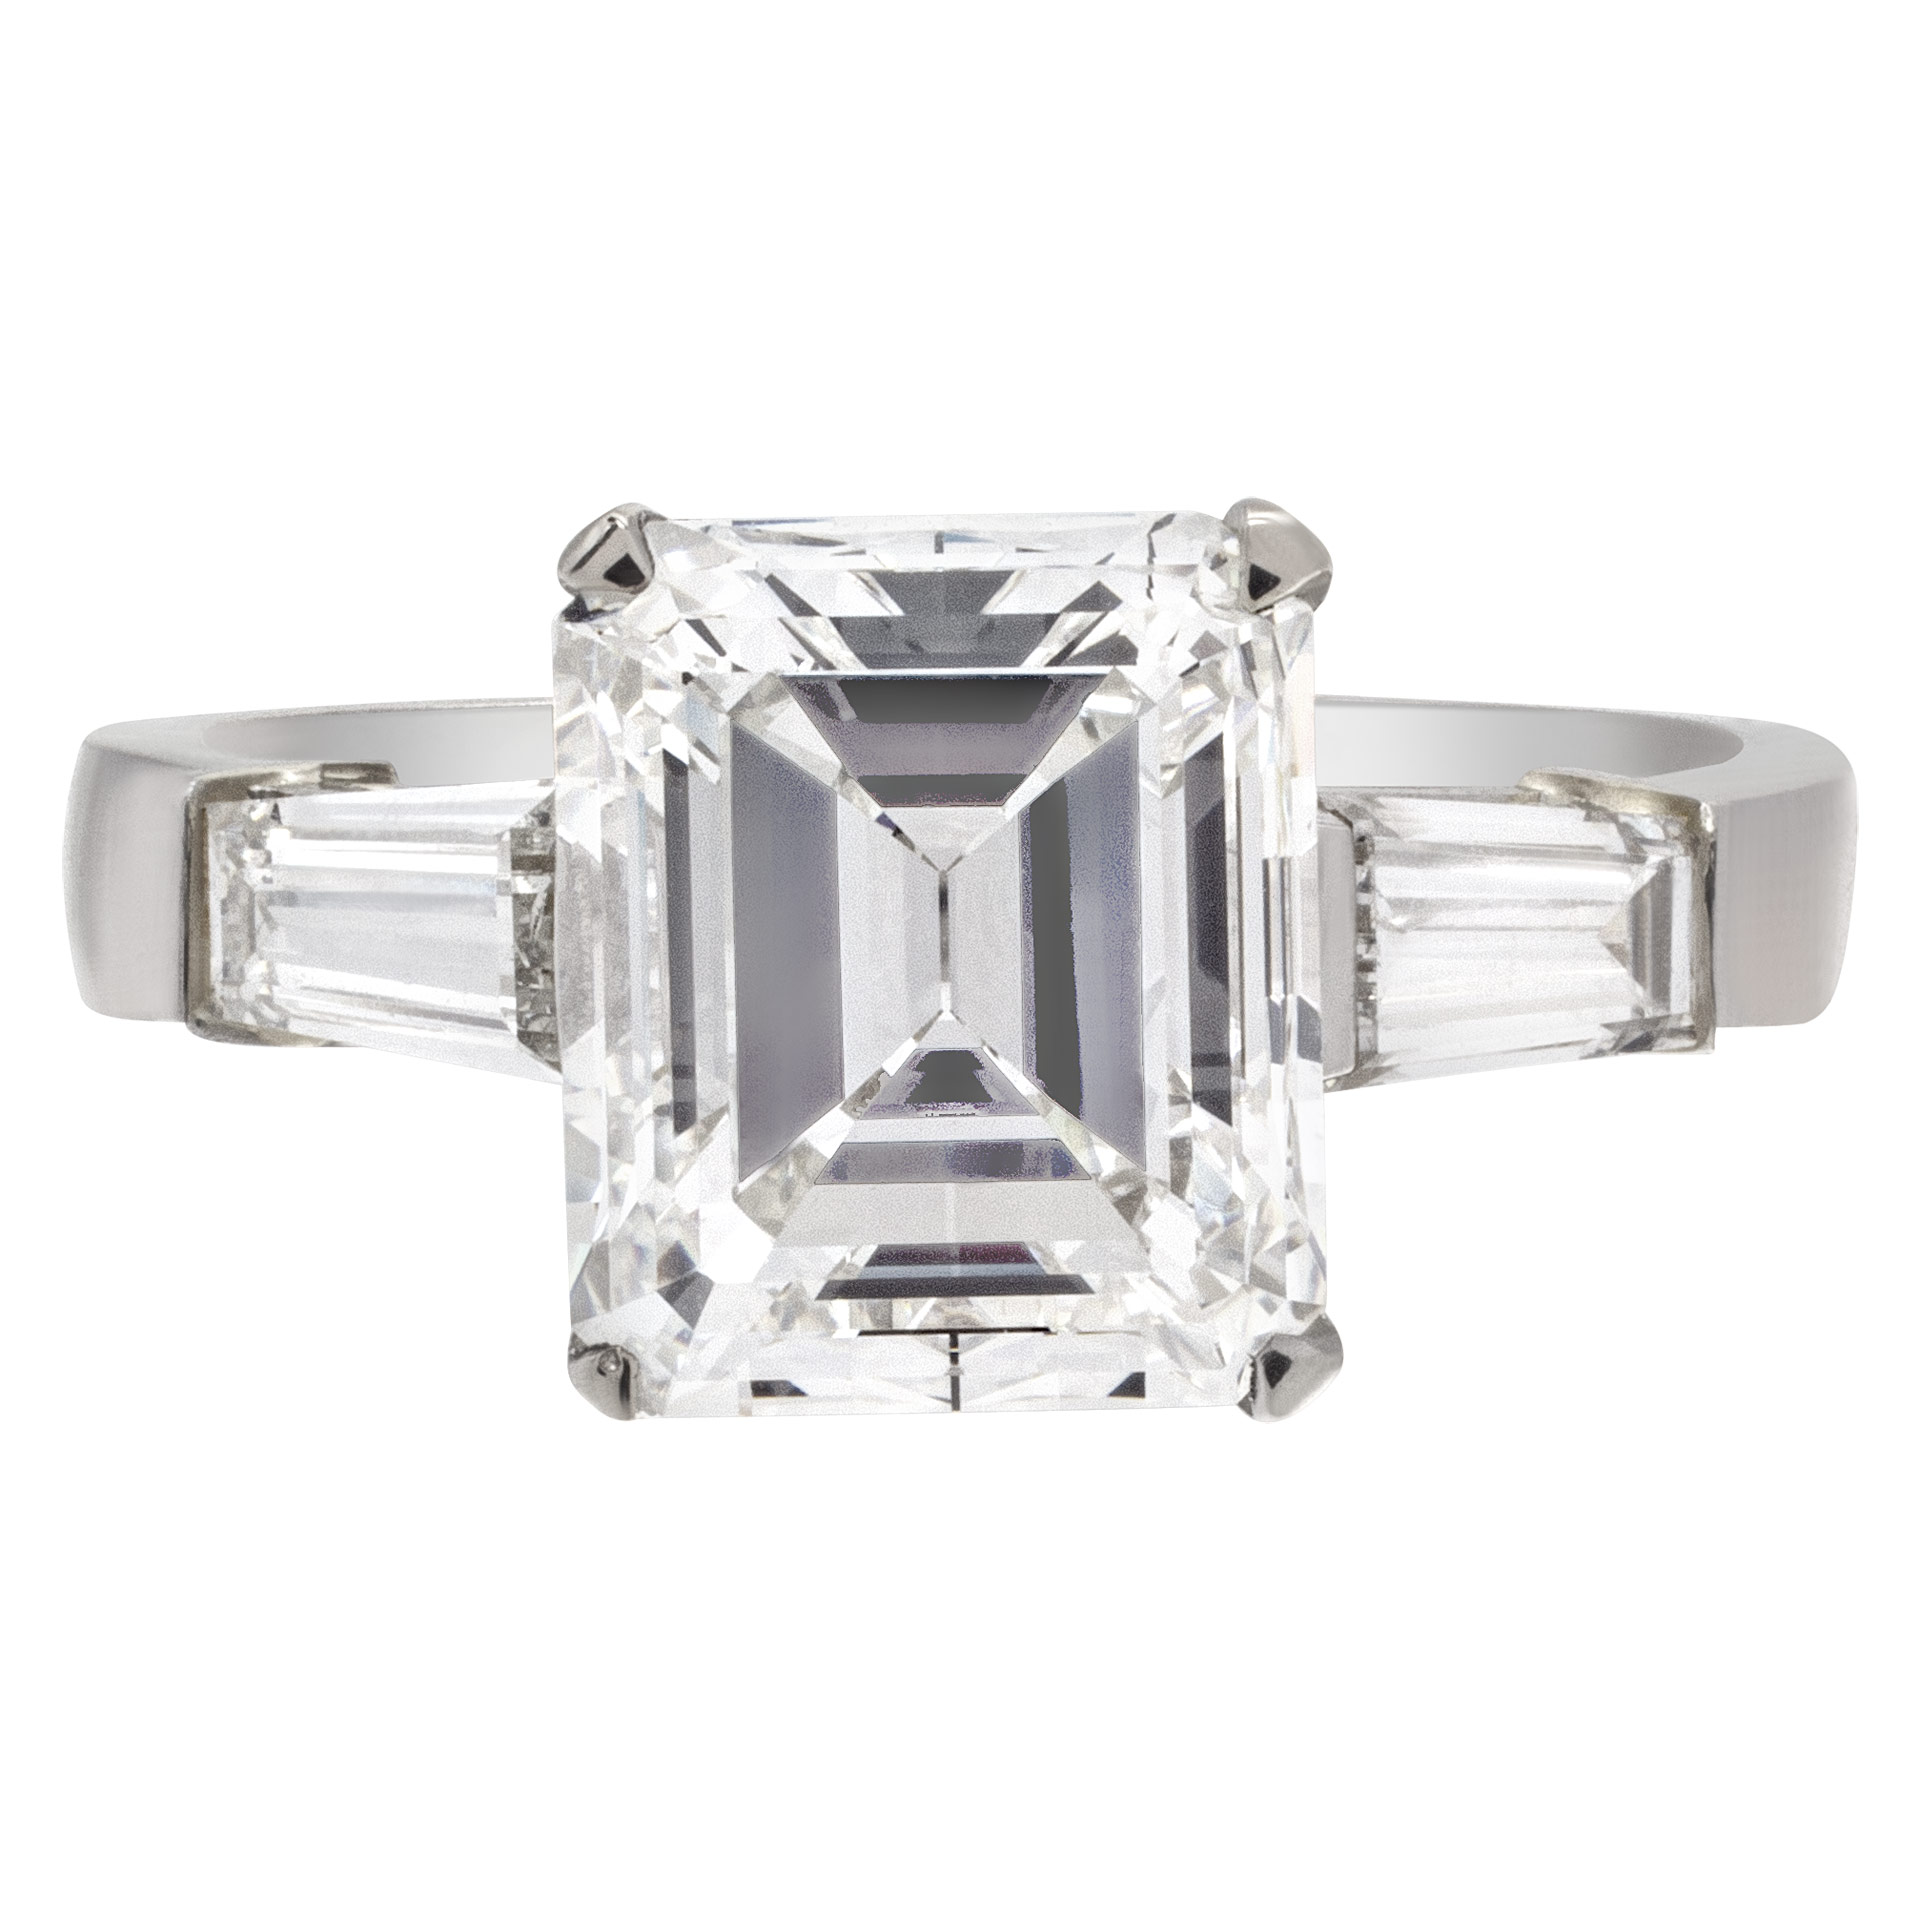 GIA certified emerald cut 3.95 carat (F color, VVS2 clarity) ring set in platinum setting